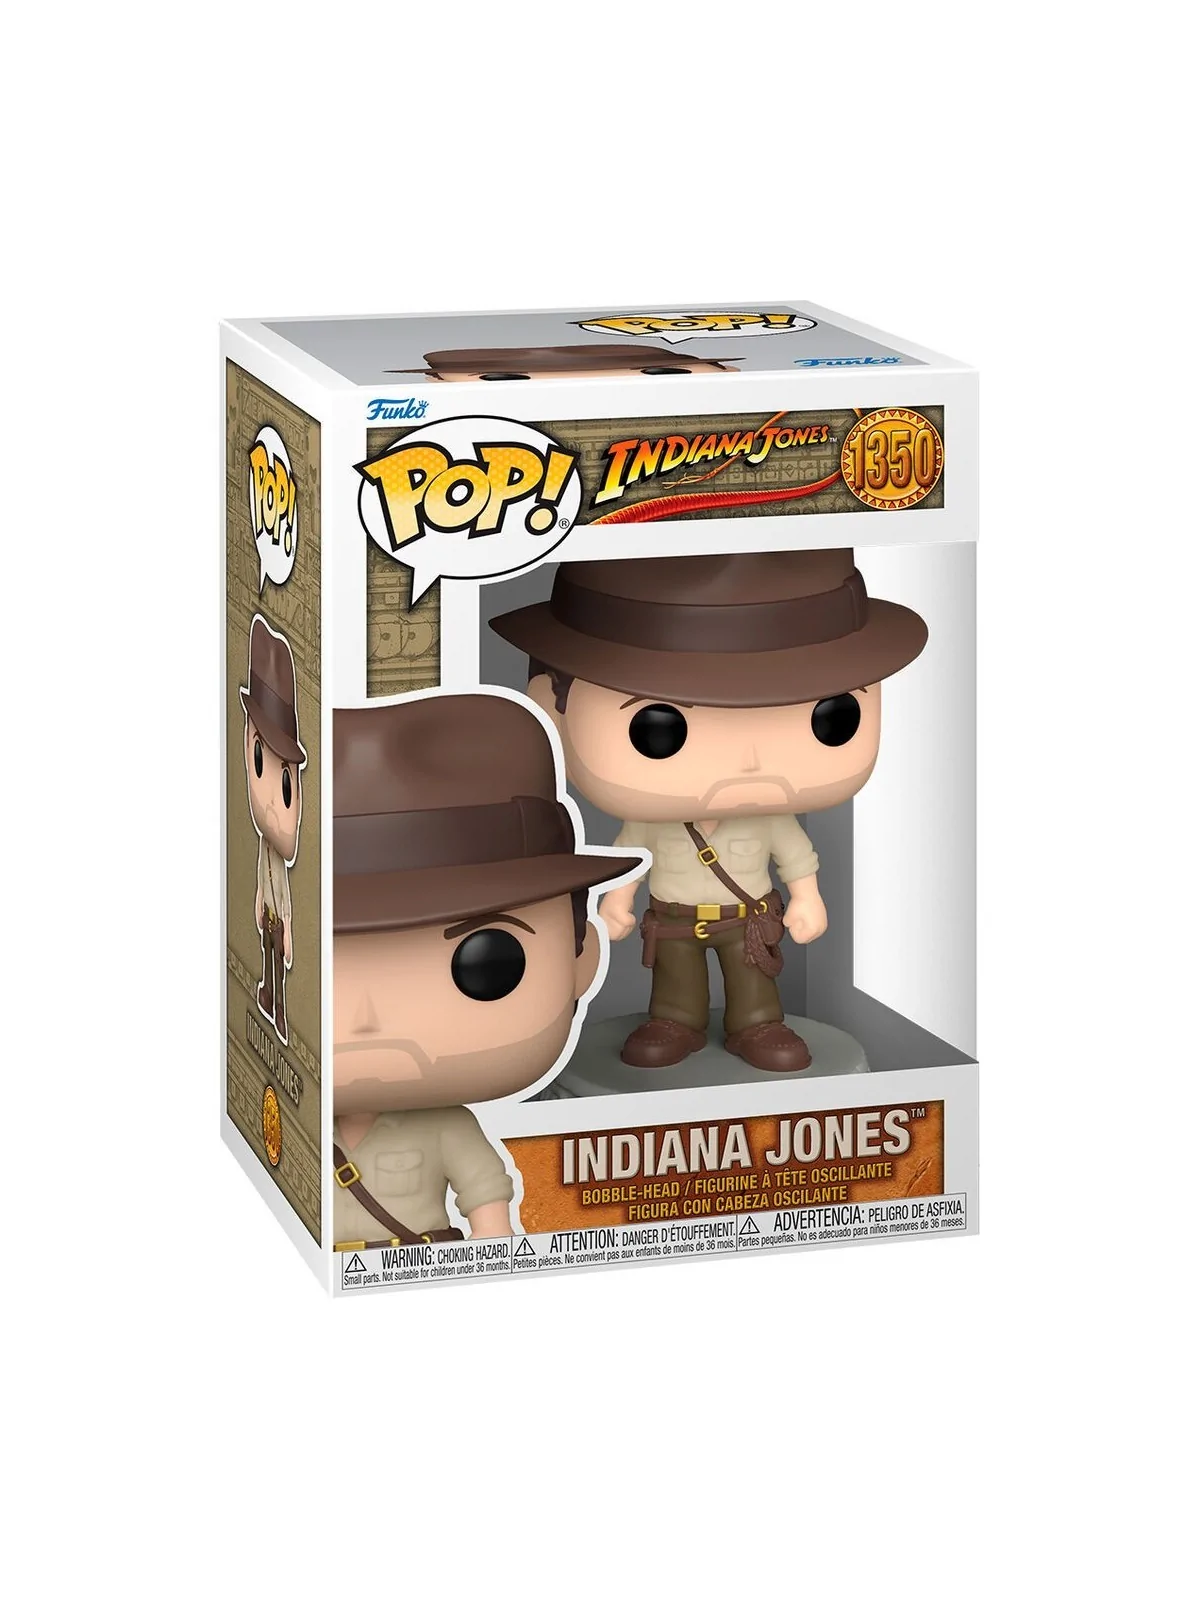 Comprar Funko POP! Indiana Jones: Indiana Jones (1350) barato al mejor